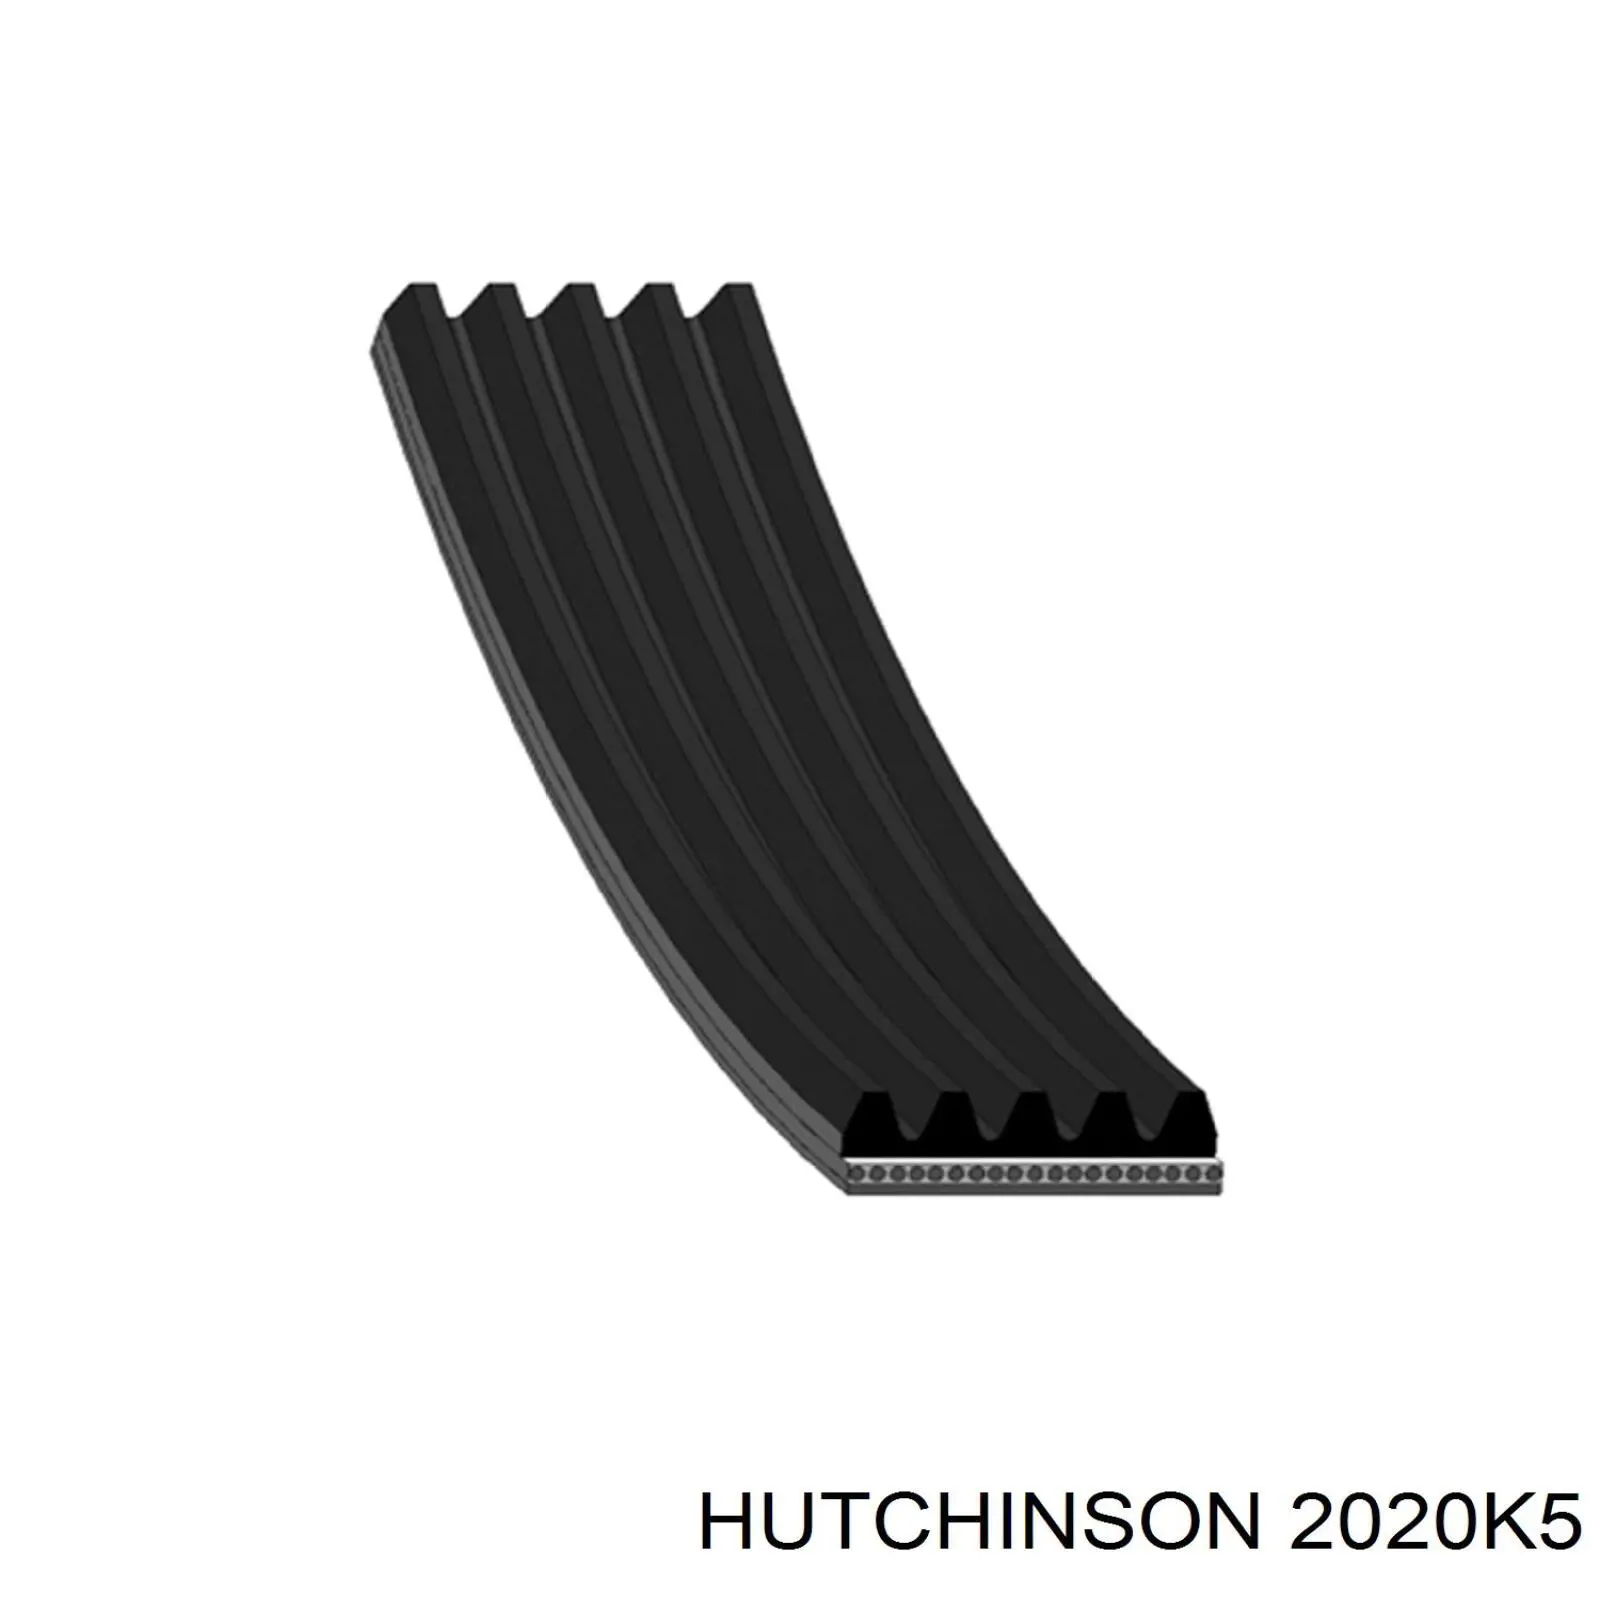 2020K5 Hutchinson correa trapezoidal